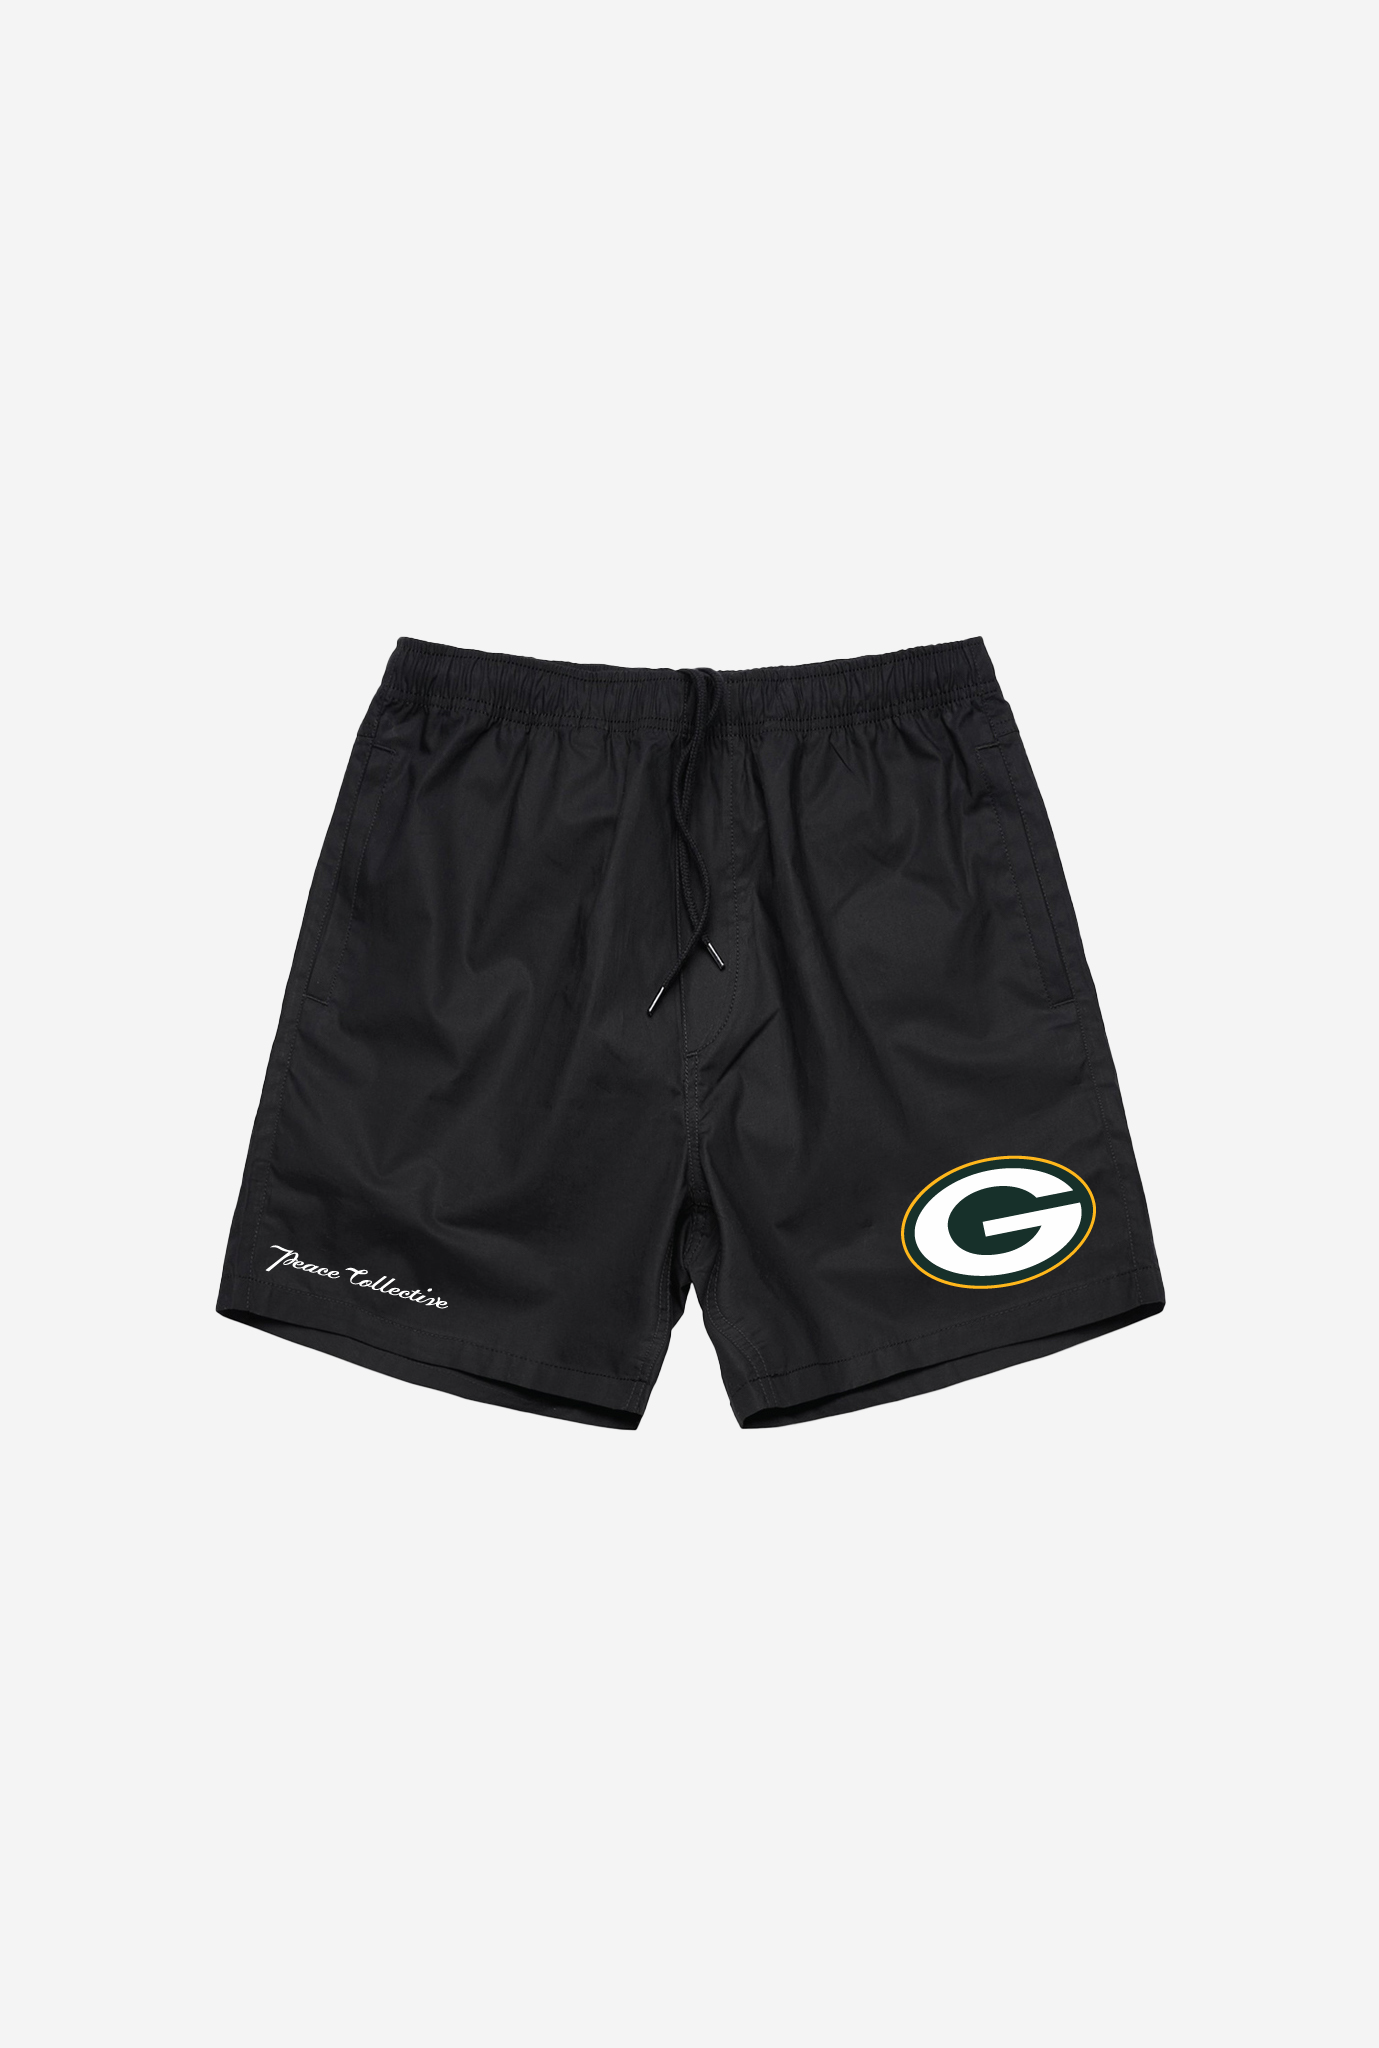 Green Bay Packers Shorts - Black